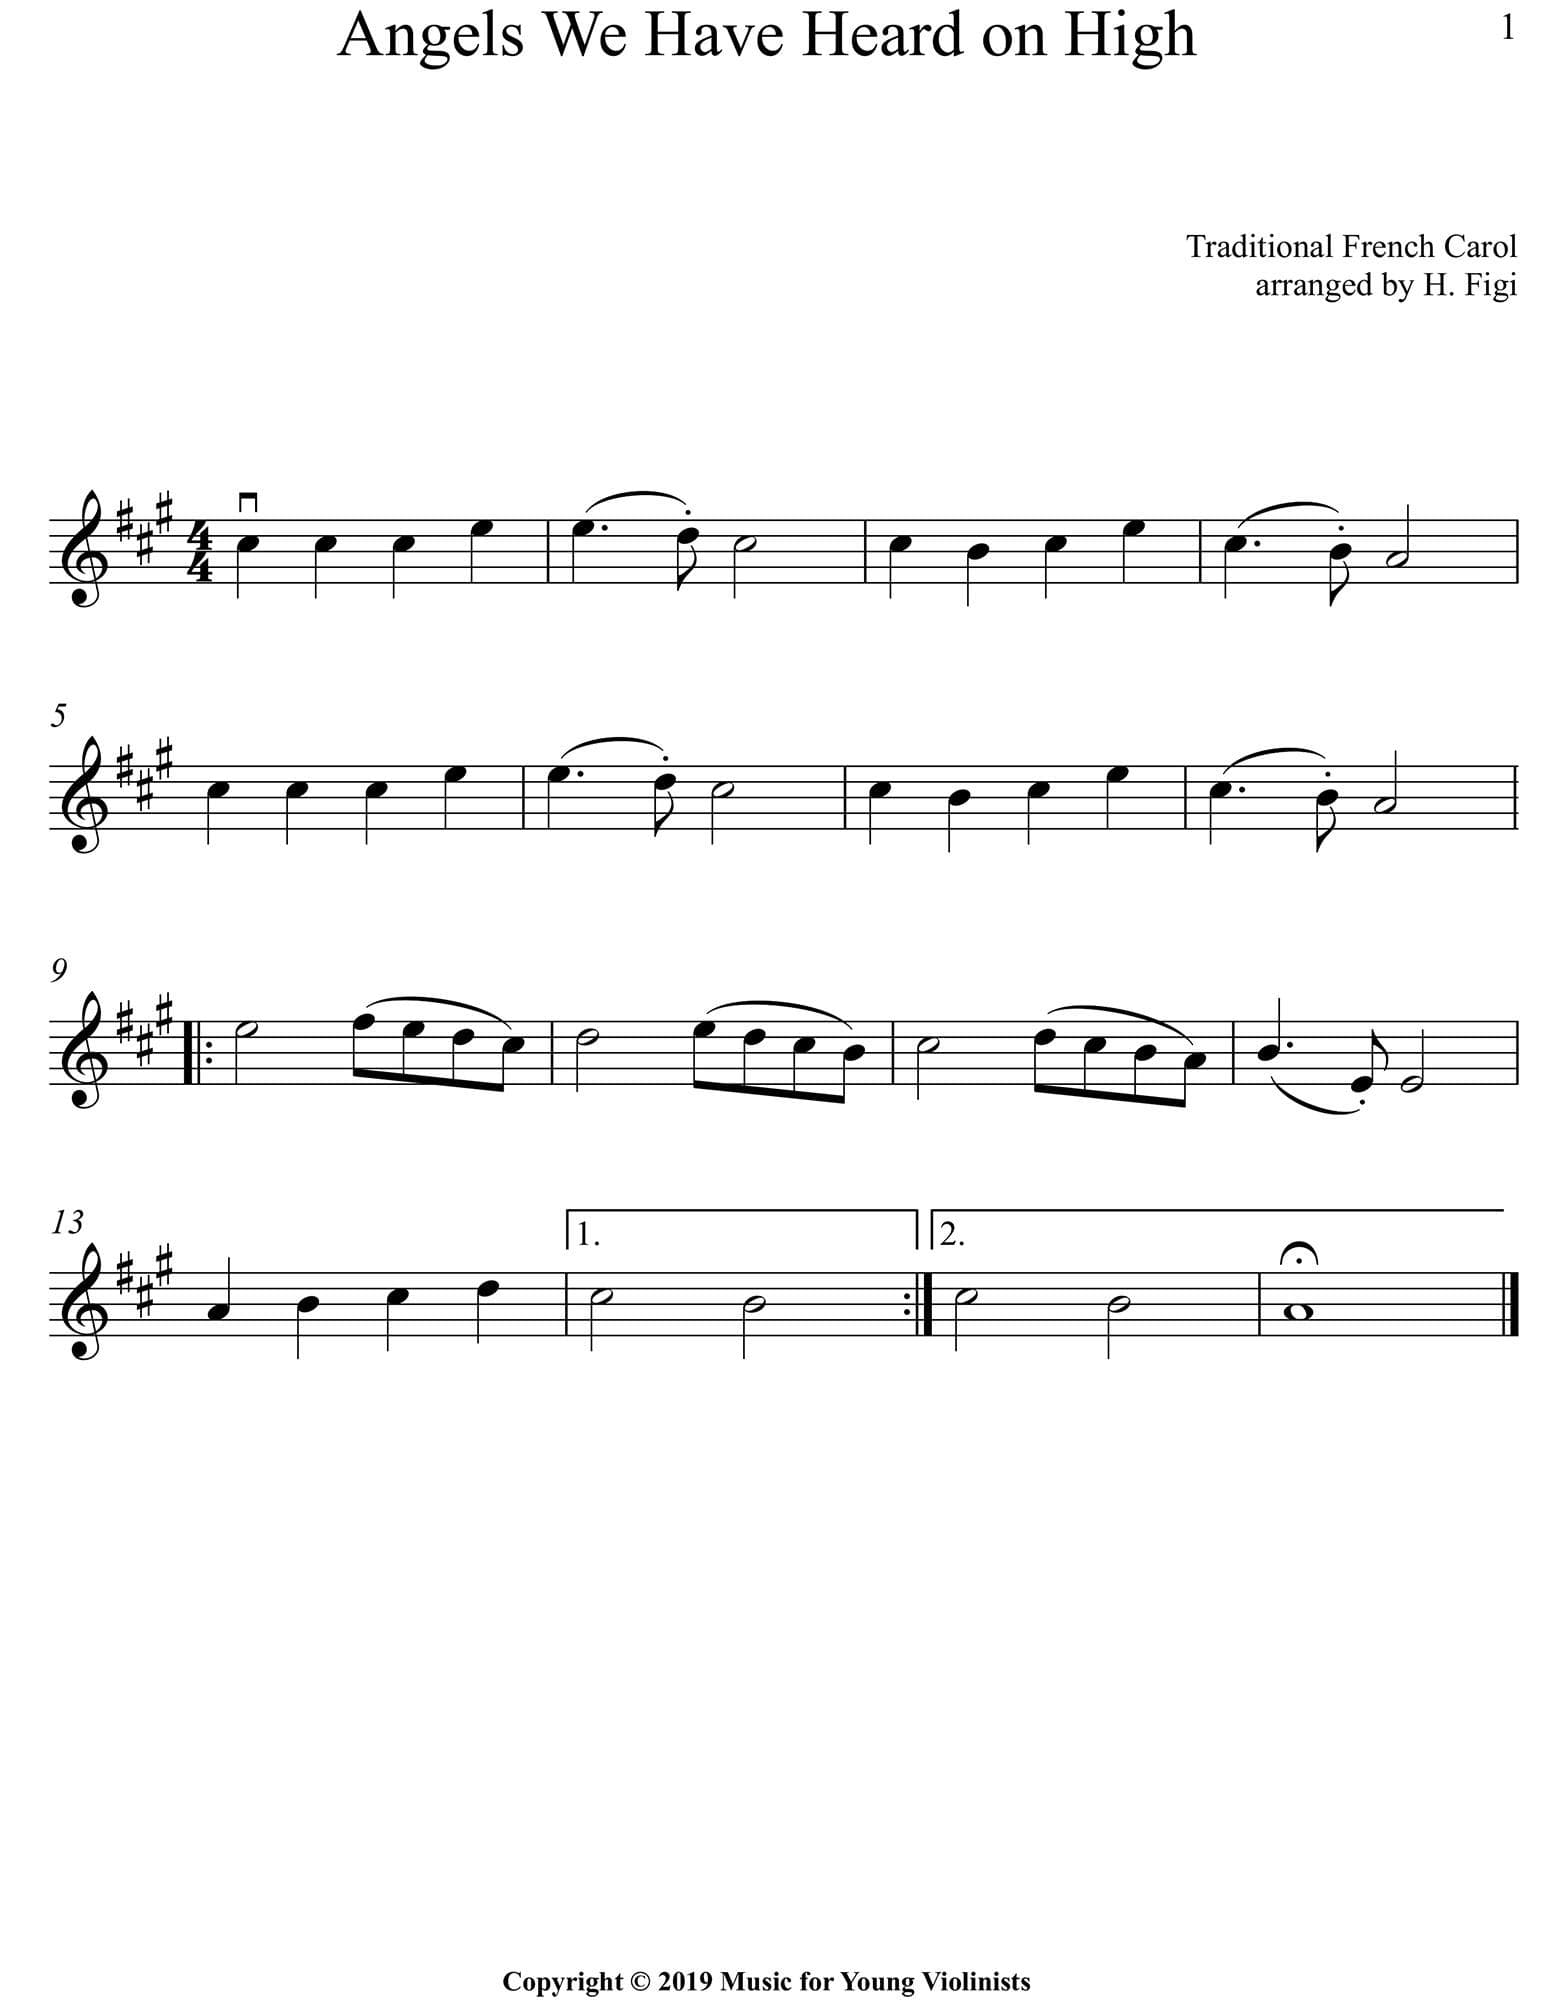 Figi, Heather - Holiday Joy! - Holiday songs for 1-4 Violins  - Digital Download